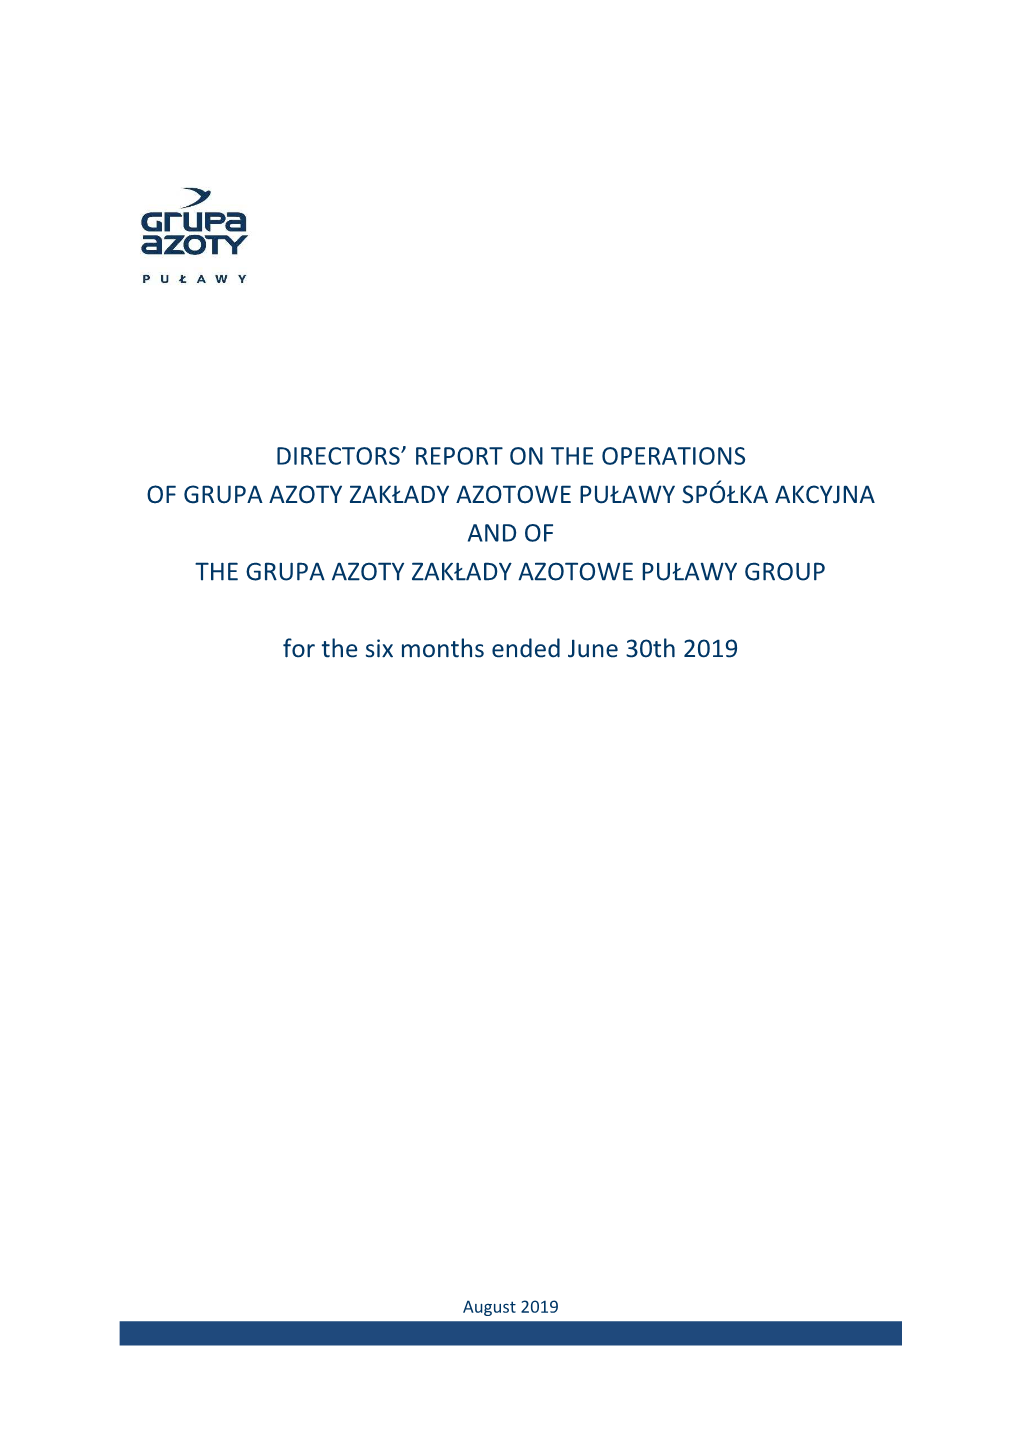 Directors'report on the Operations of the Grupa Azoty Zakłady Azotowe